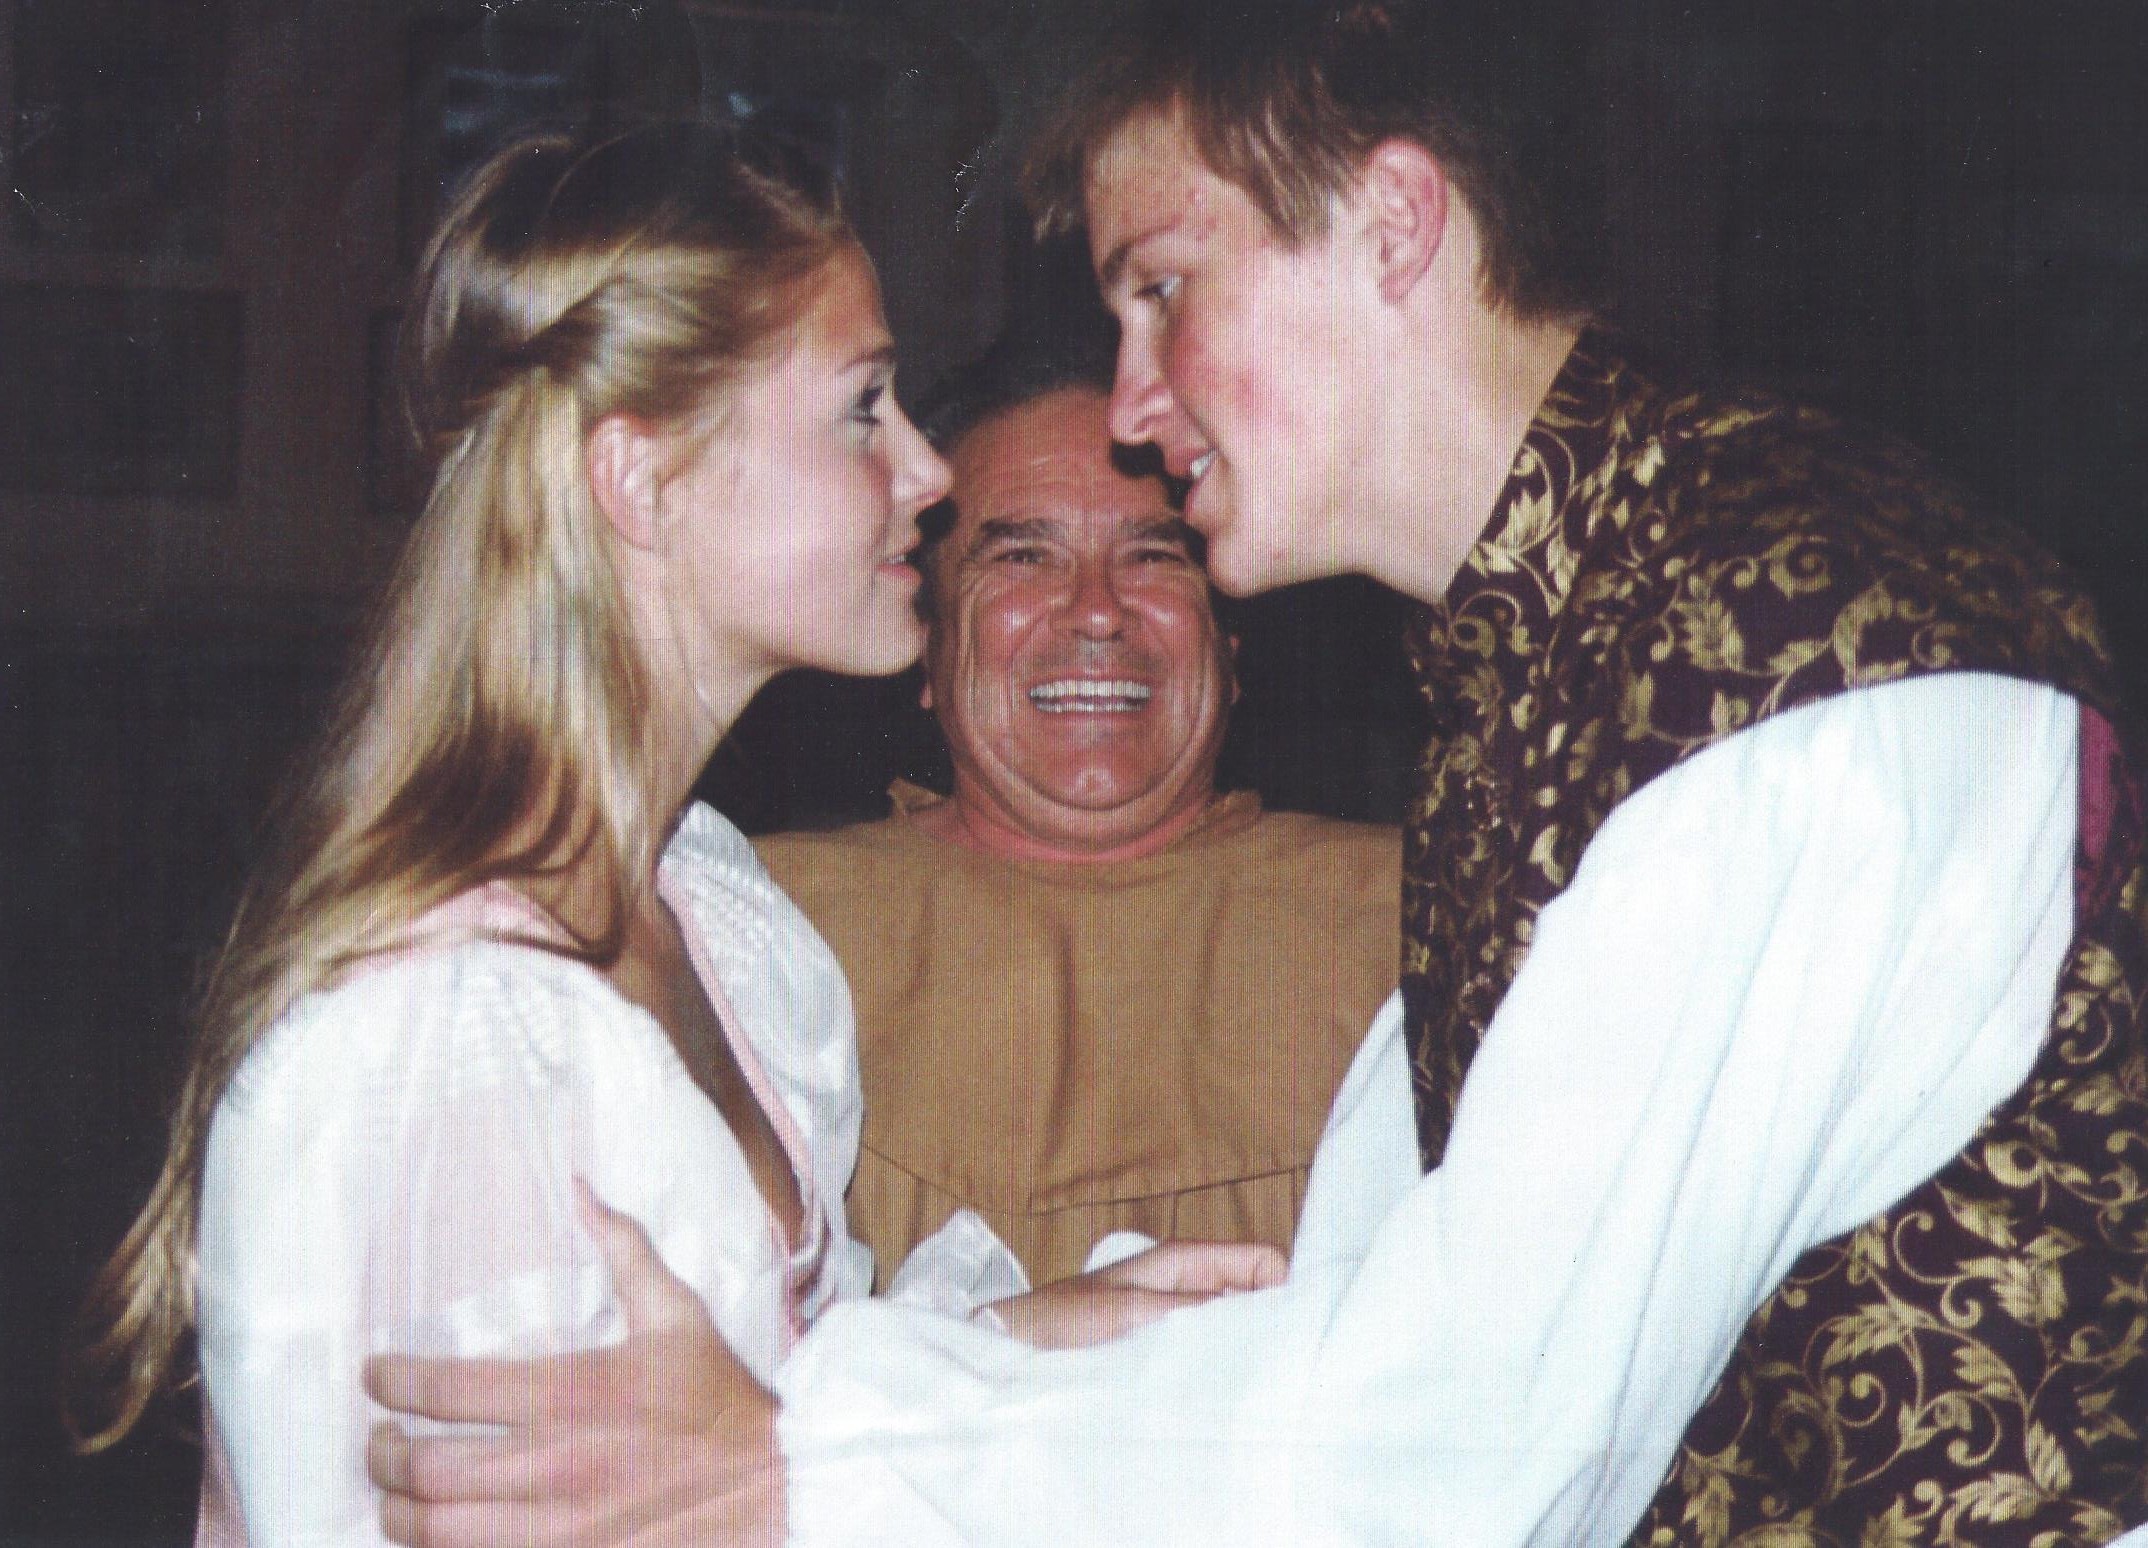 2002 - Romeo and Juliet